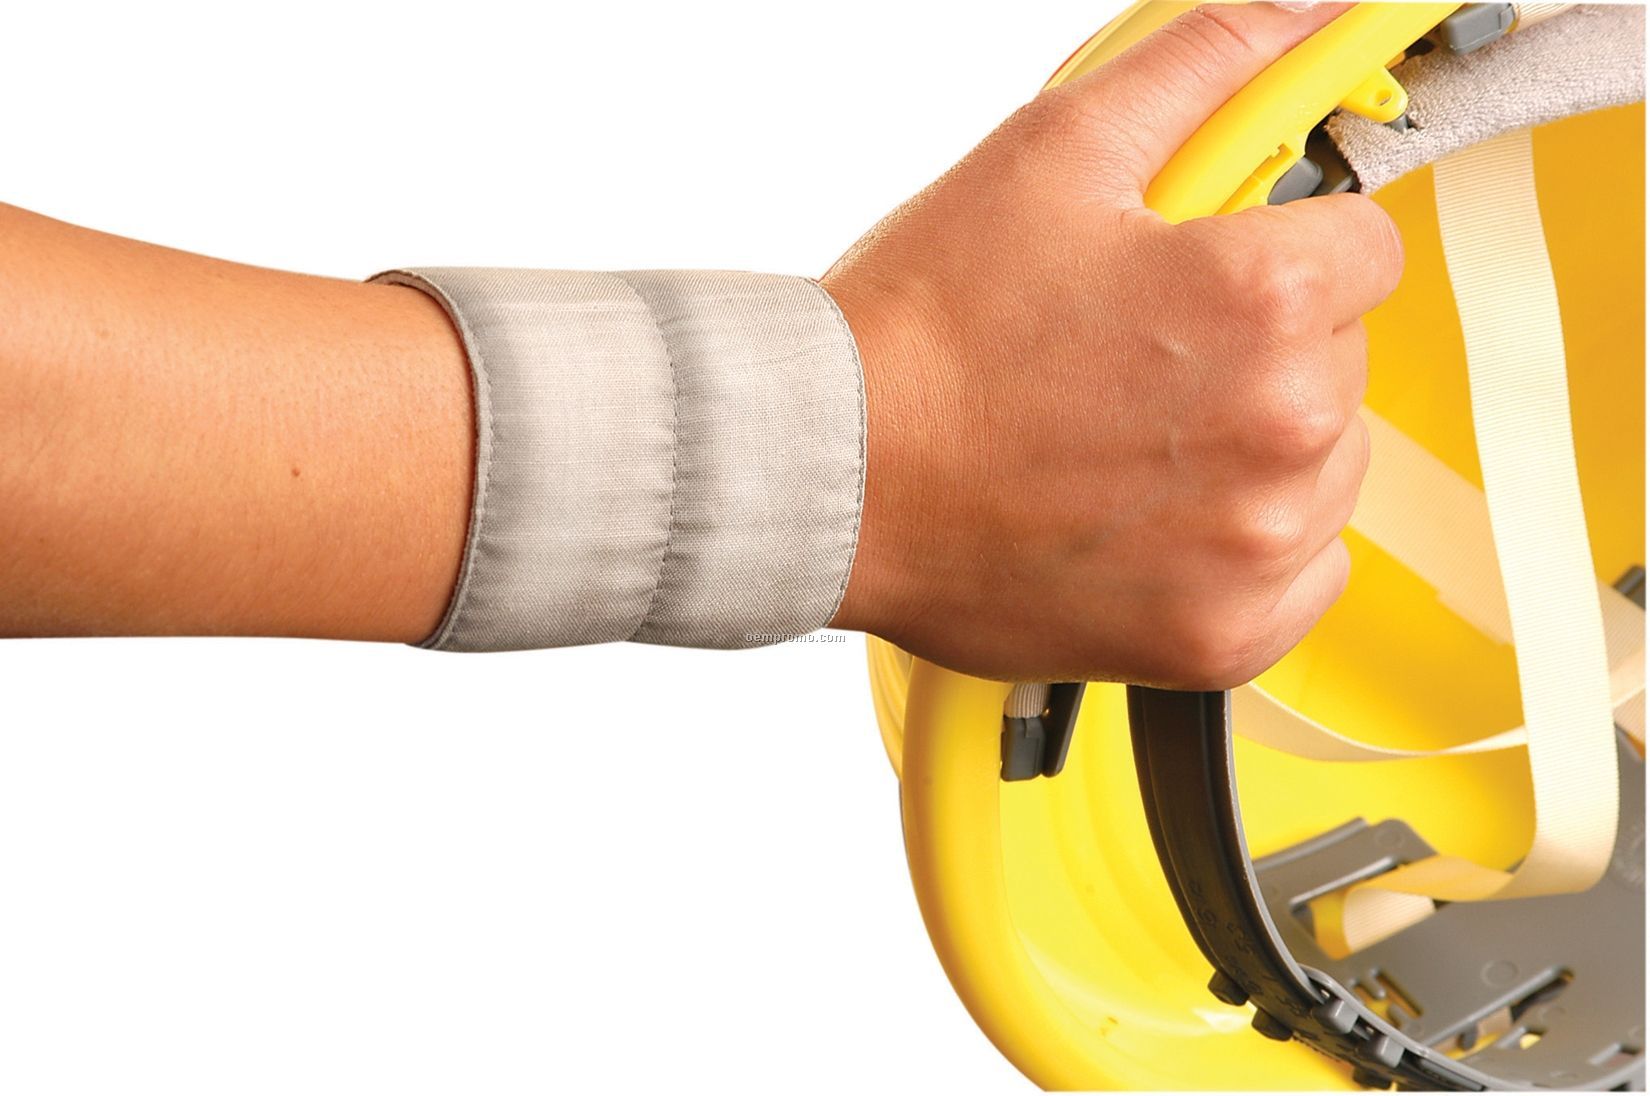 Miracool Wrist Support Ergonomic Wrist Support